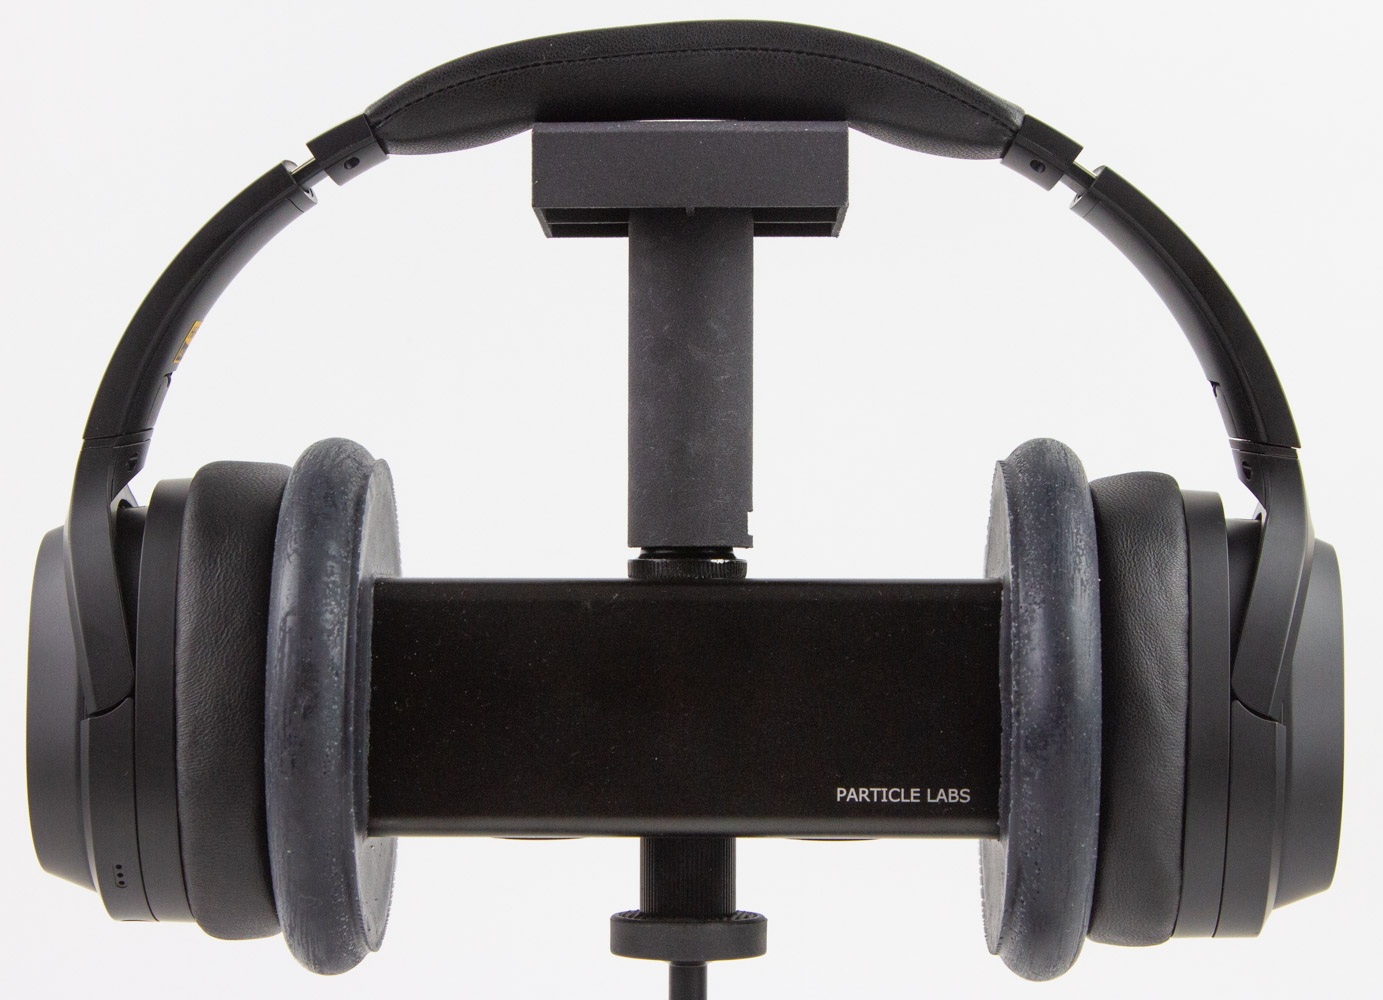 Edifier STAX SPIRIT S3 Planar Magnetic Wireless Headphones Review